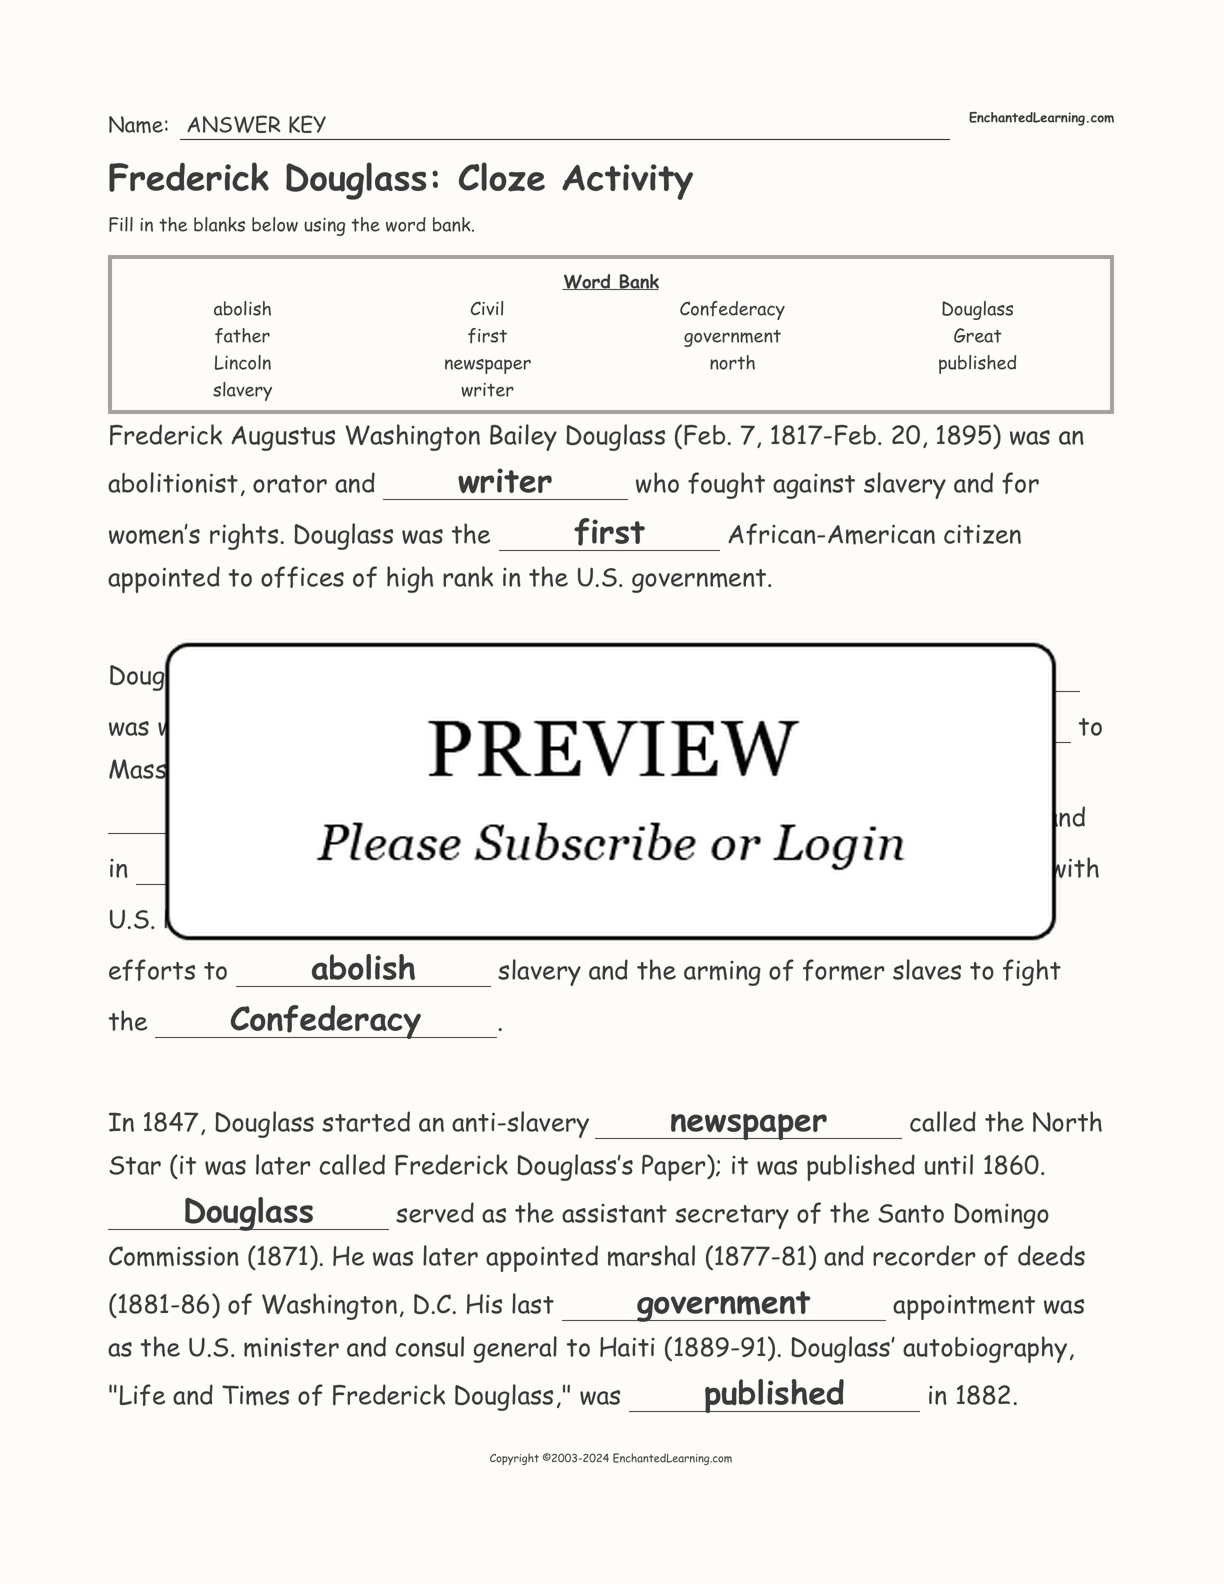 Frederick Douglass: Cloze Activity interactive worksheet page 2